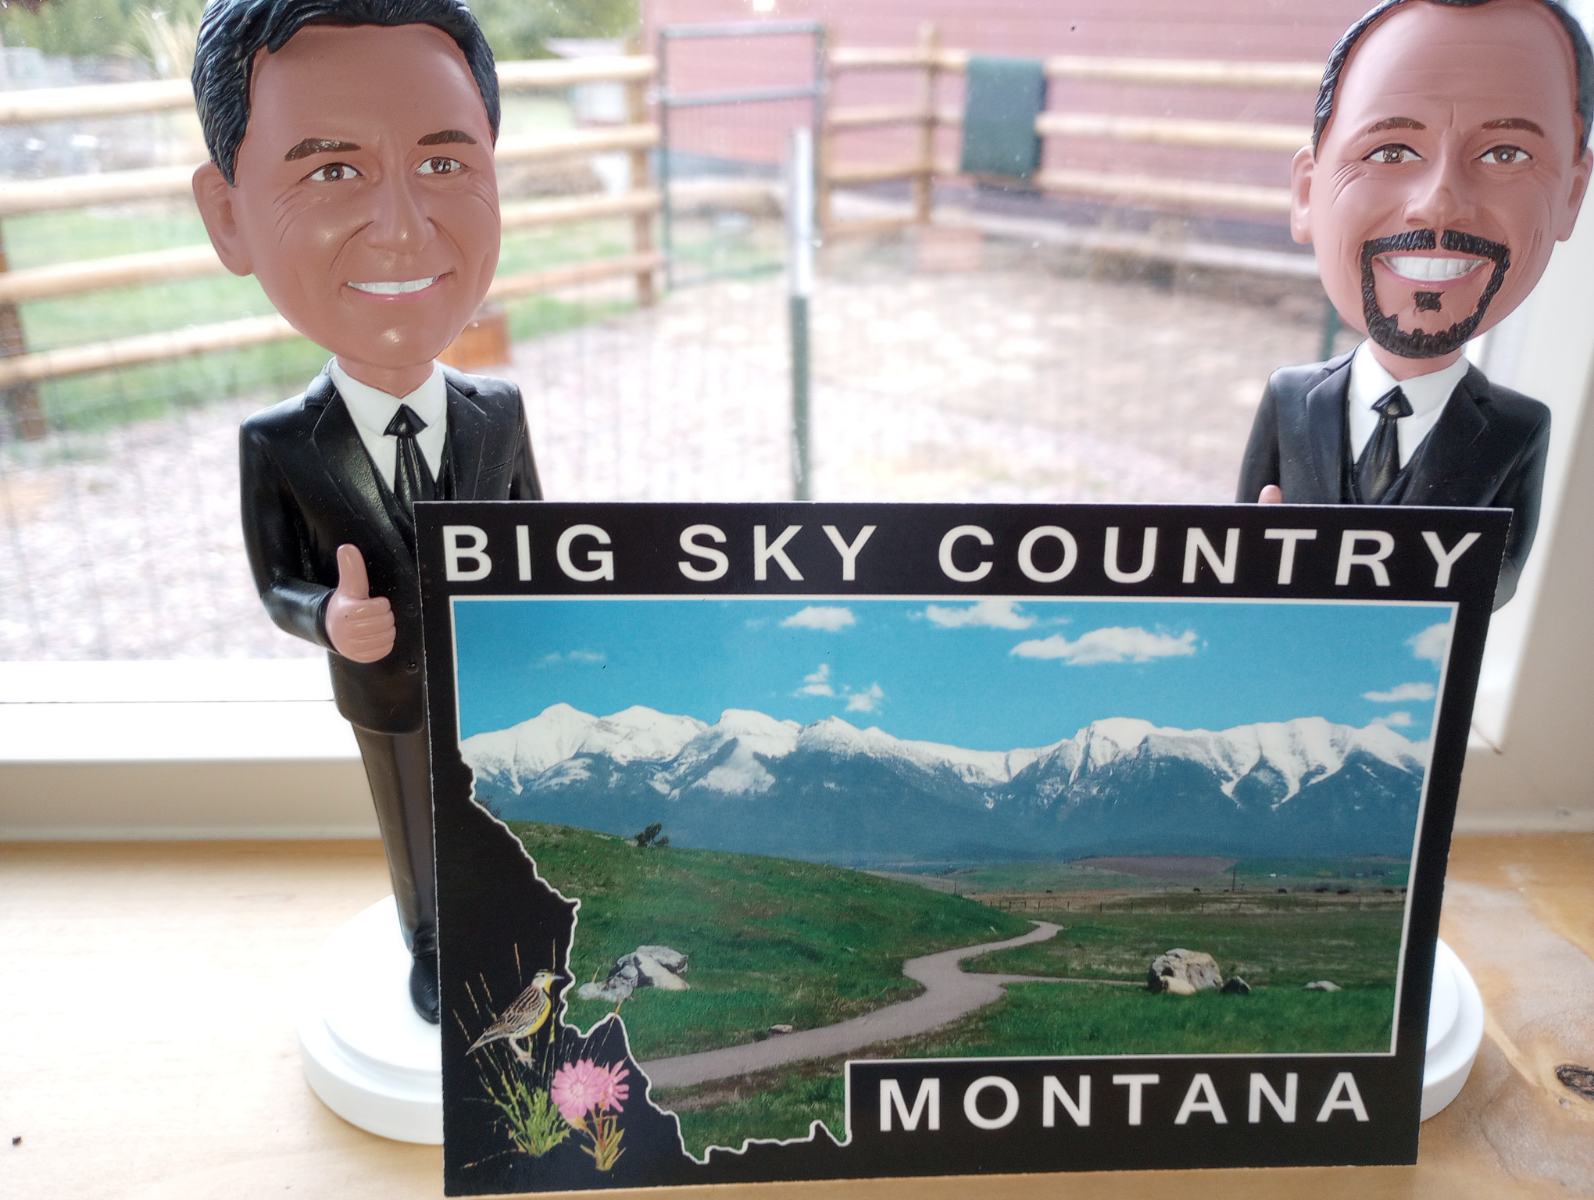 Little Danny & Little Jimmy off the grid in Montana!